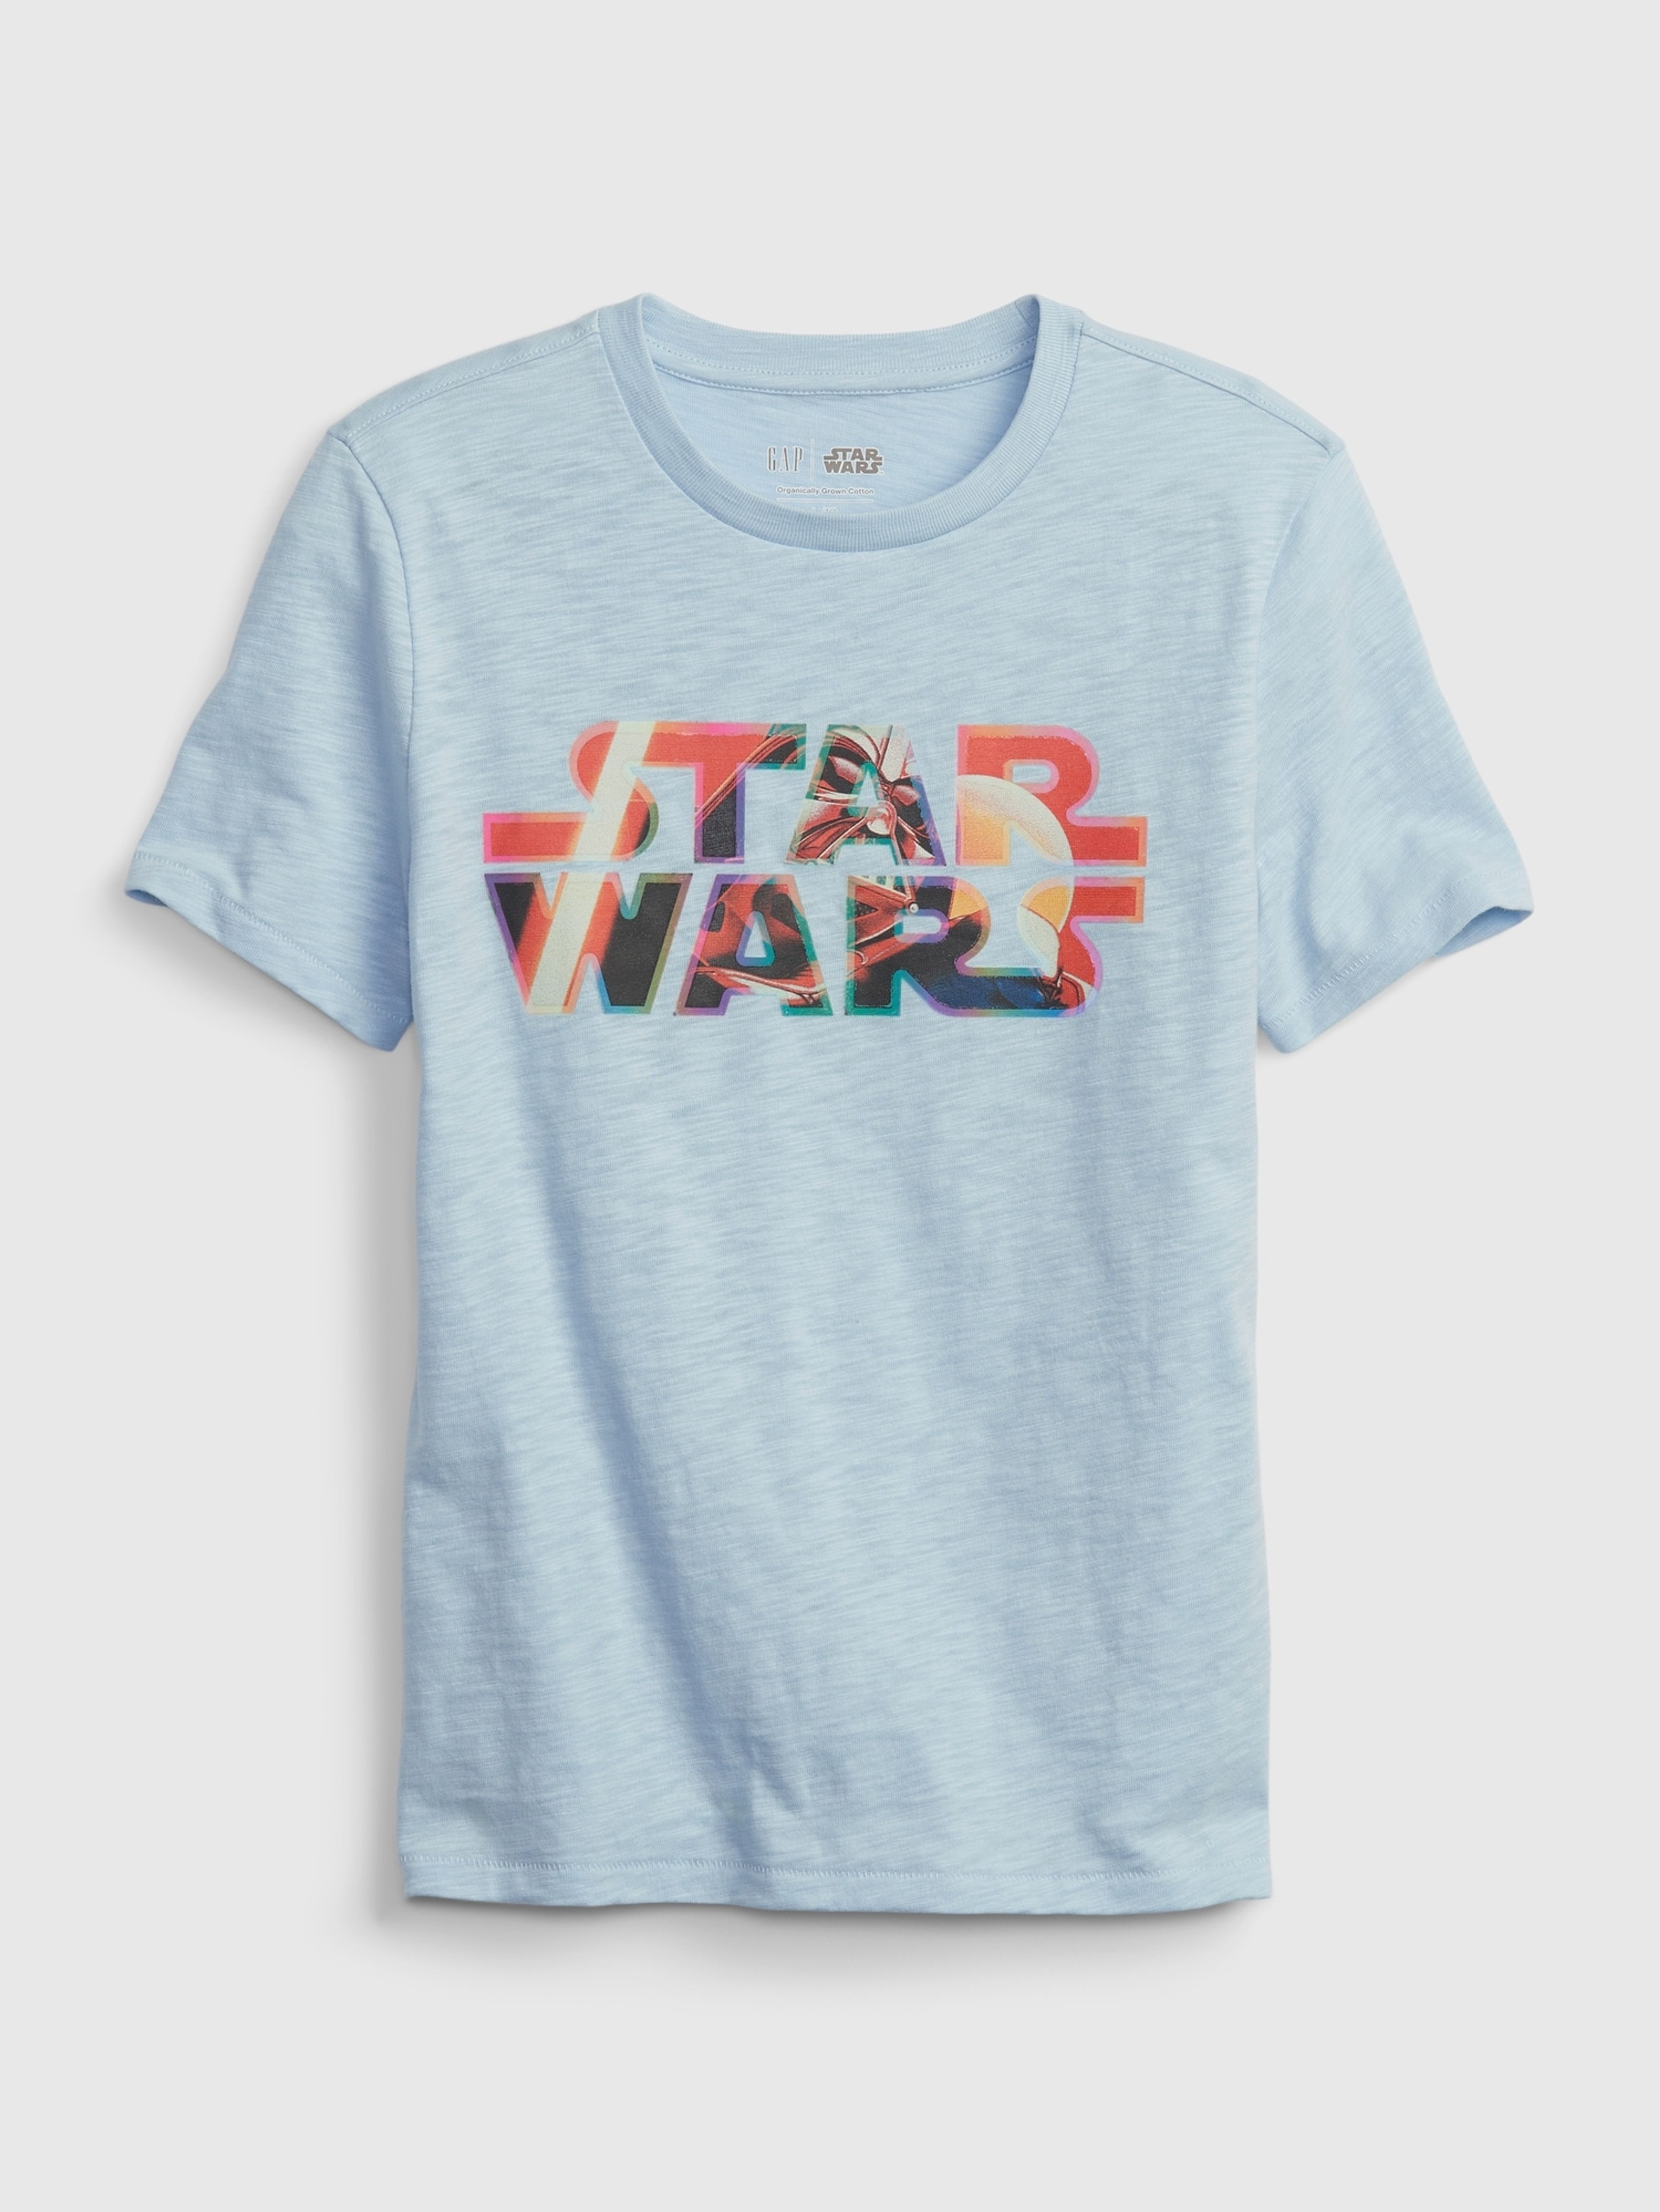 T-shirt dziecięcy GAP & Star Wars organic